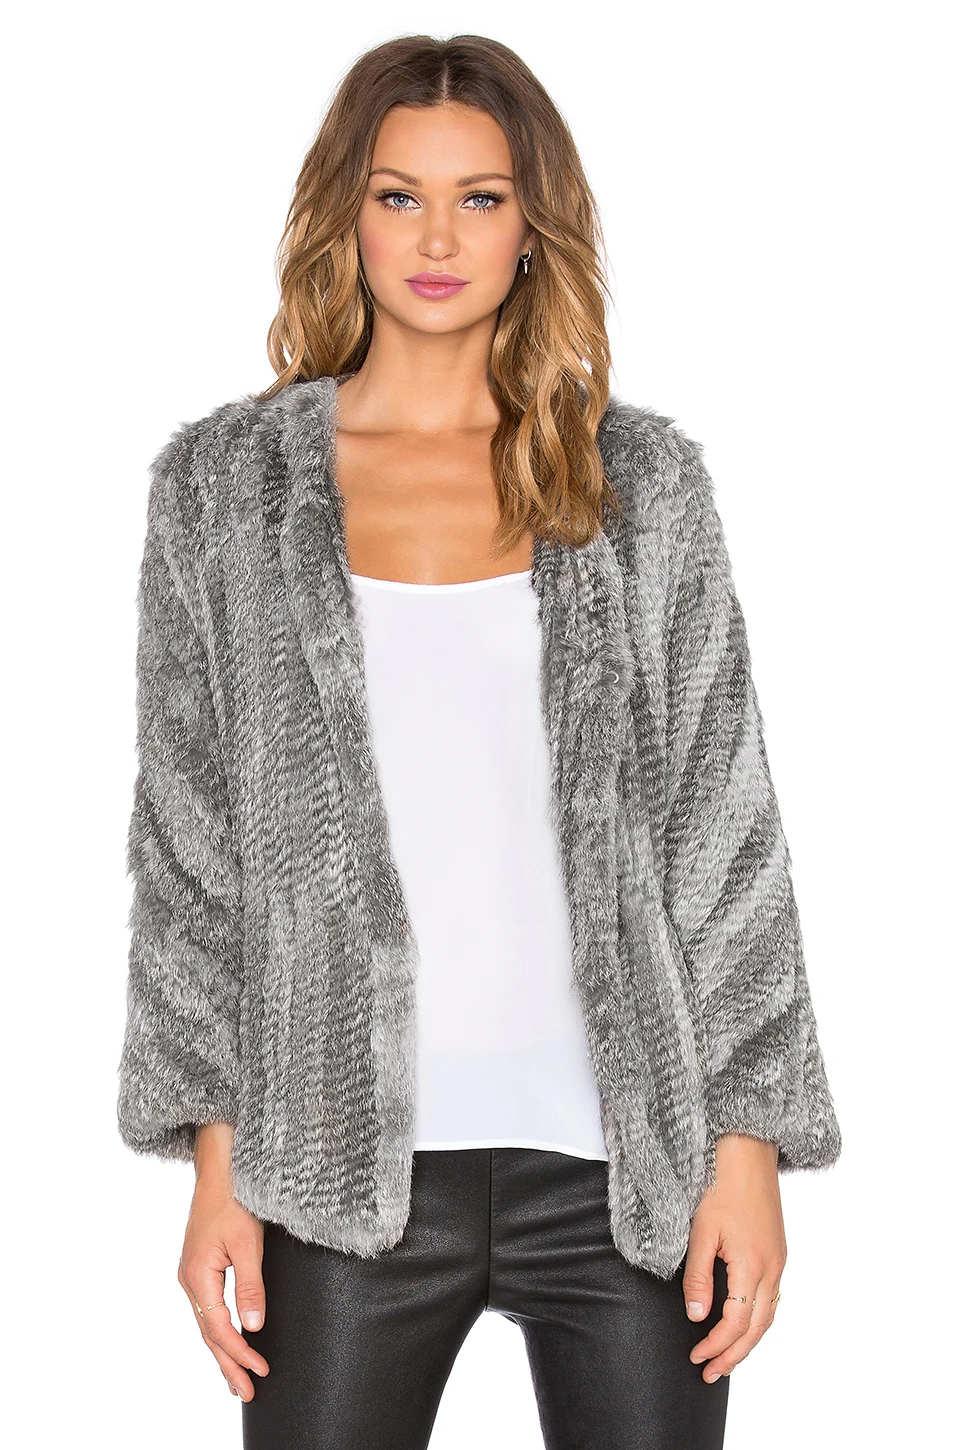 2021 New Design Knitted knit new real rabbit fur coat overcoat jacket women's winter thick warm genuine fur coat